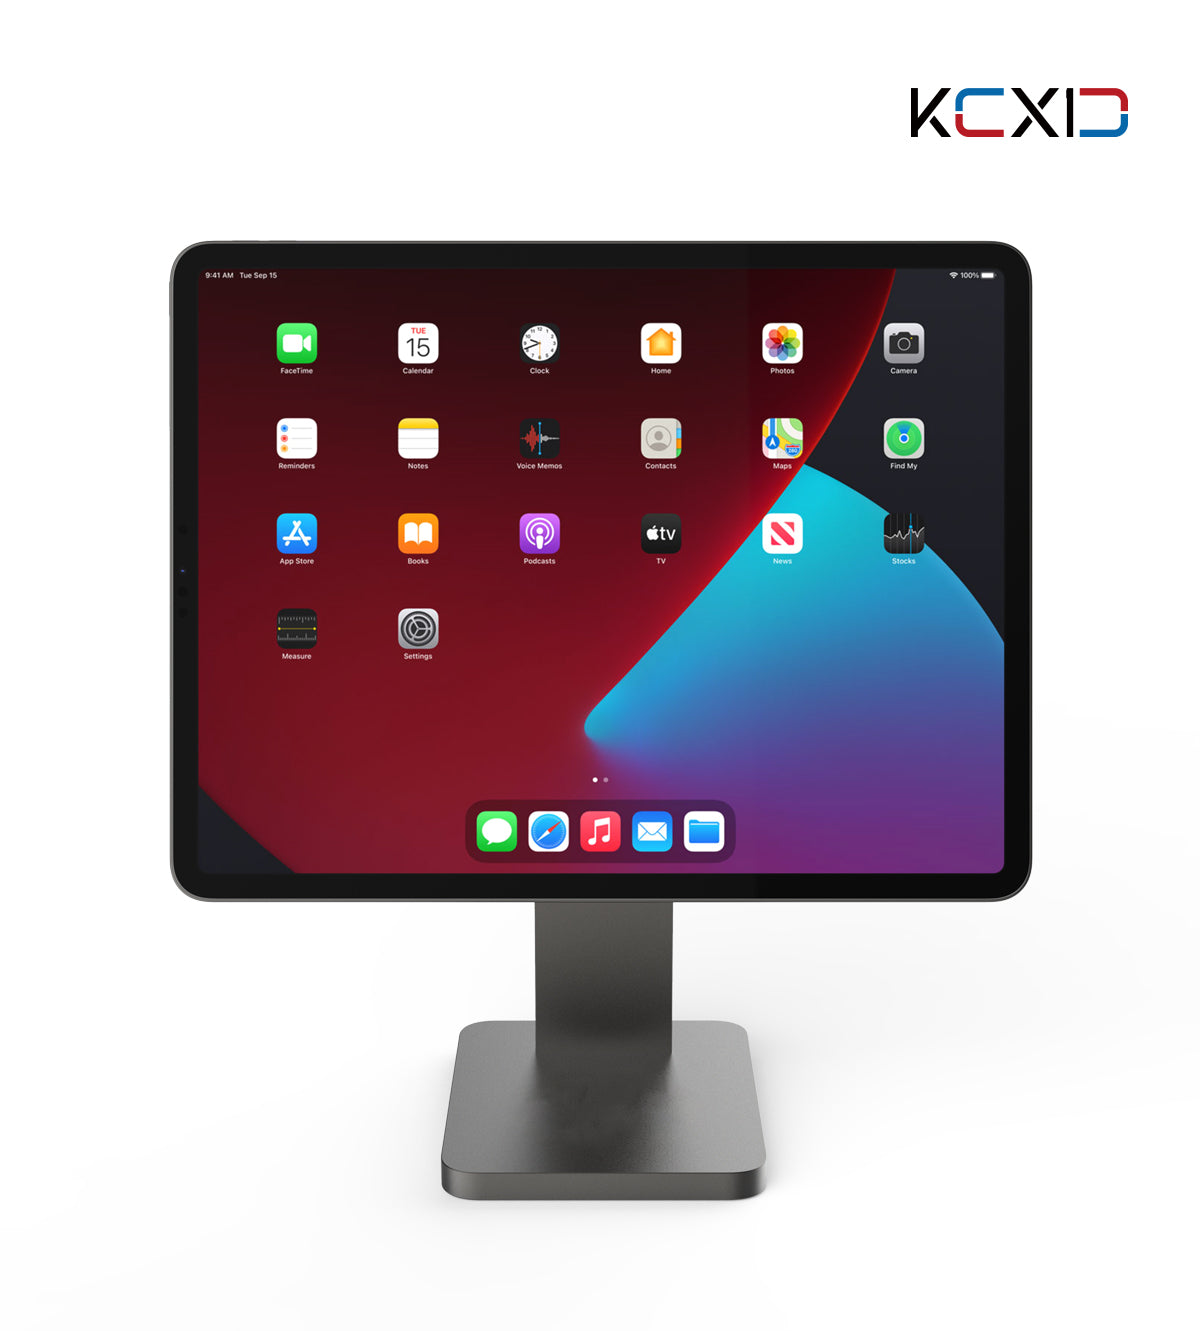 KUXIU X27 iPad magnetic stand